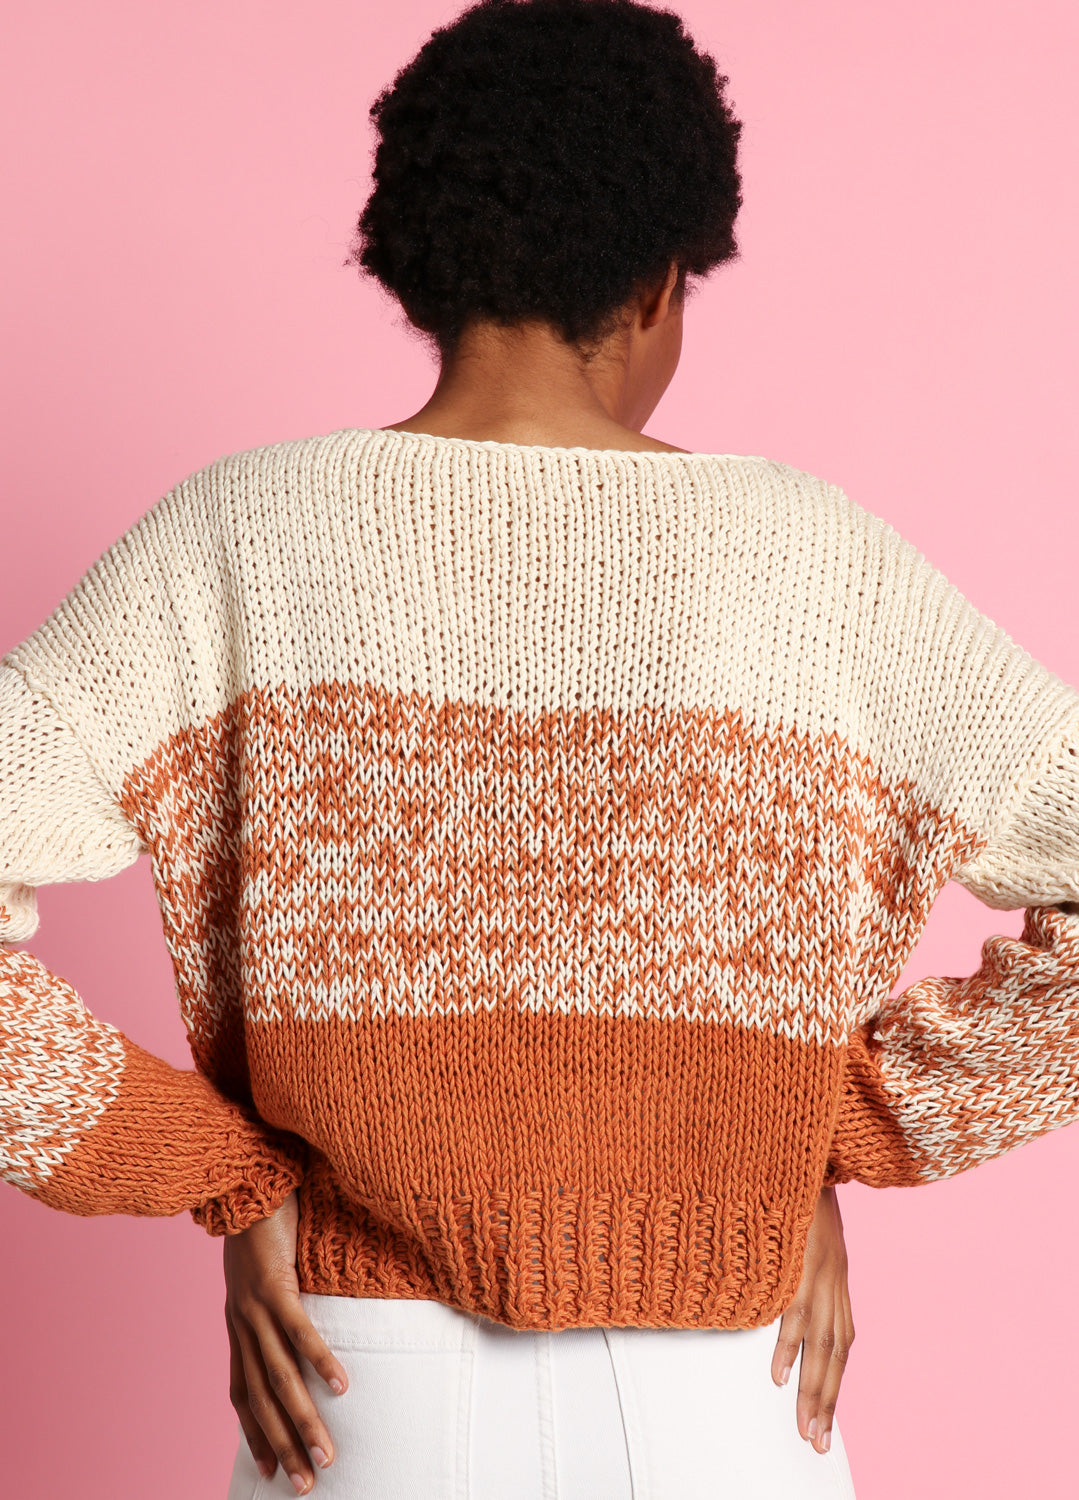 Acadia Sweater Kit